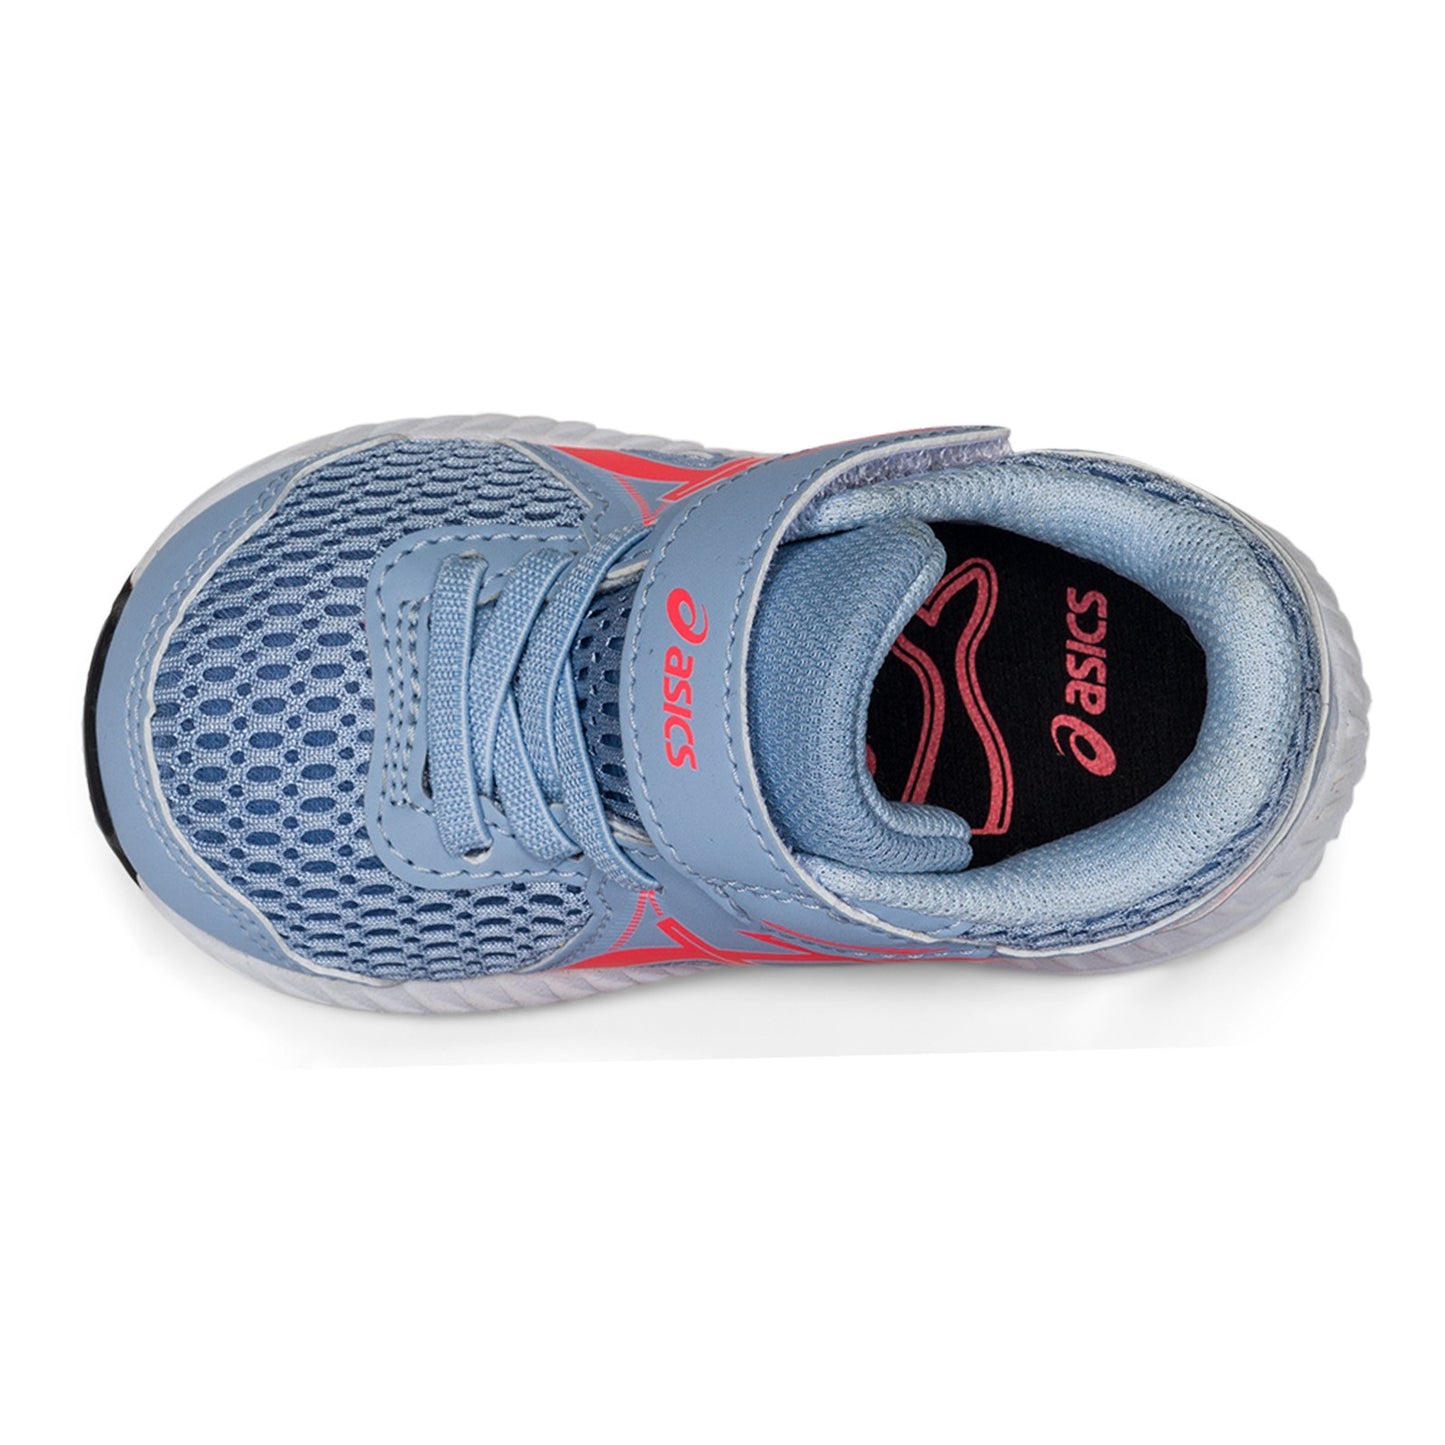 Peltz Shoes  Girl's ASICS Contend 7 TS Running Shoe - Toddler MIST/CORAL 1014A193.406